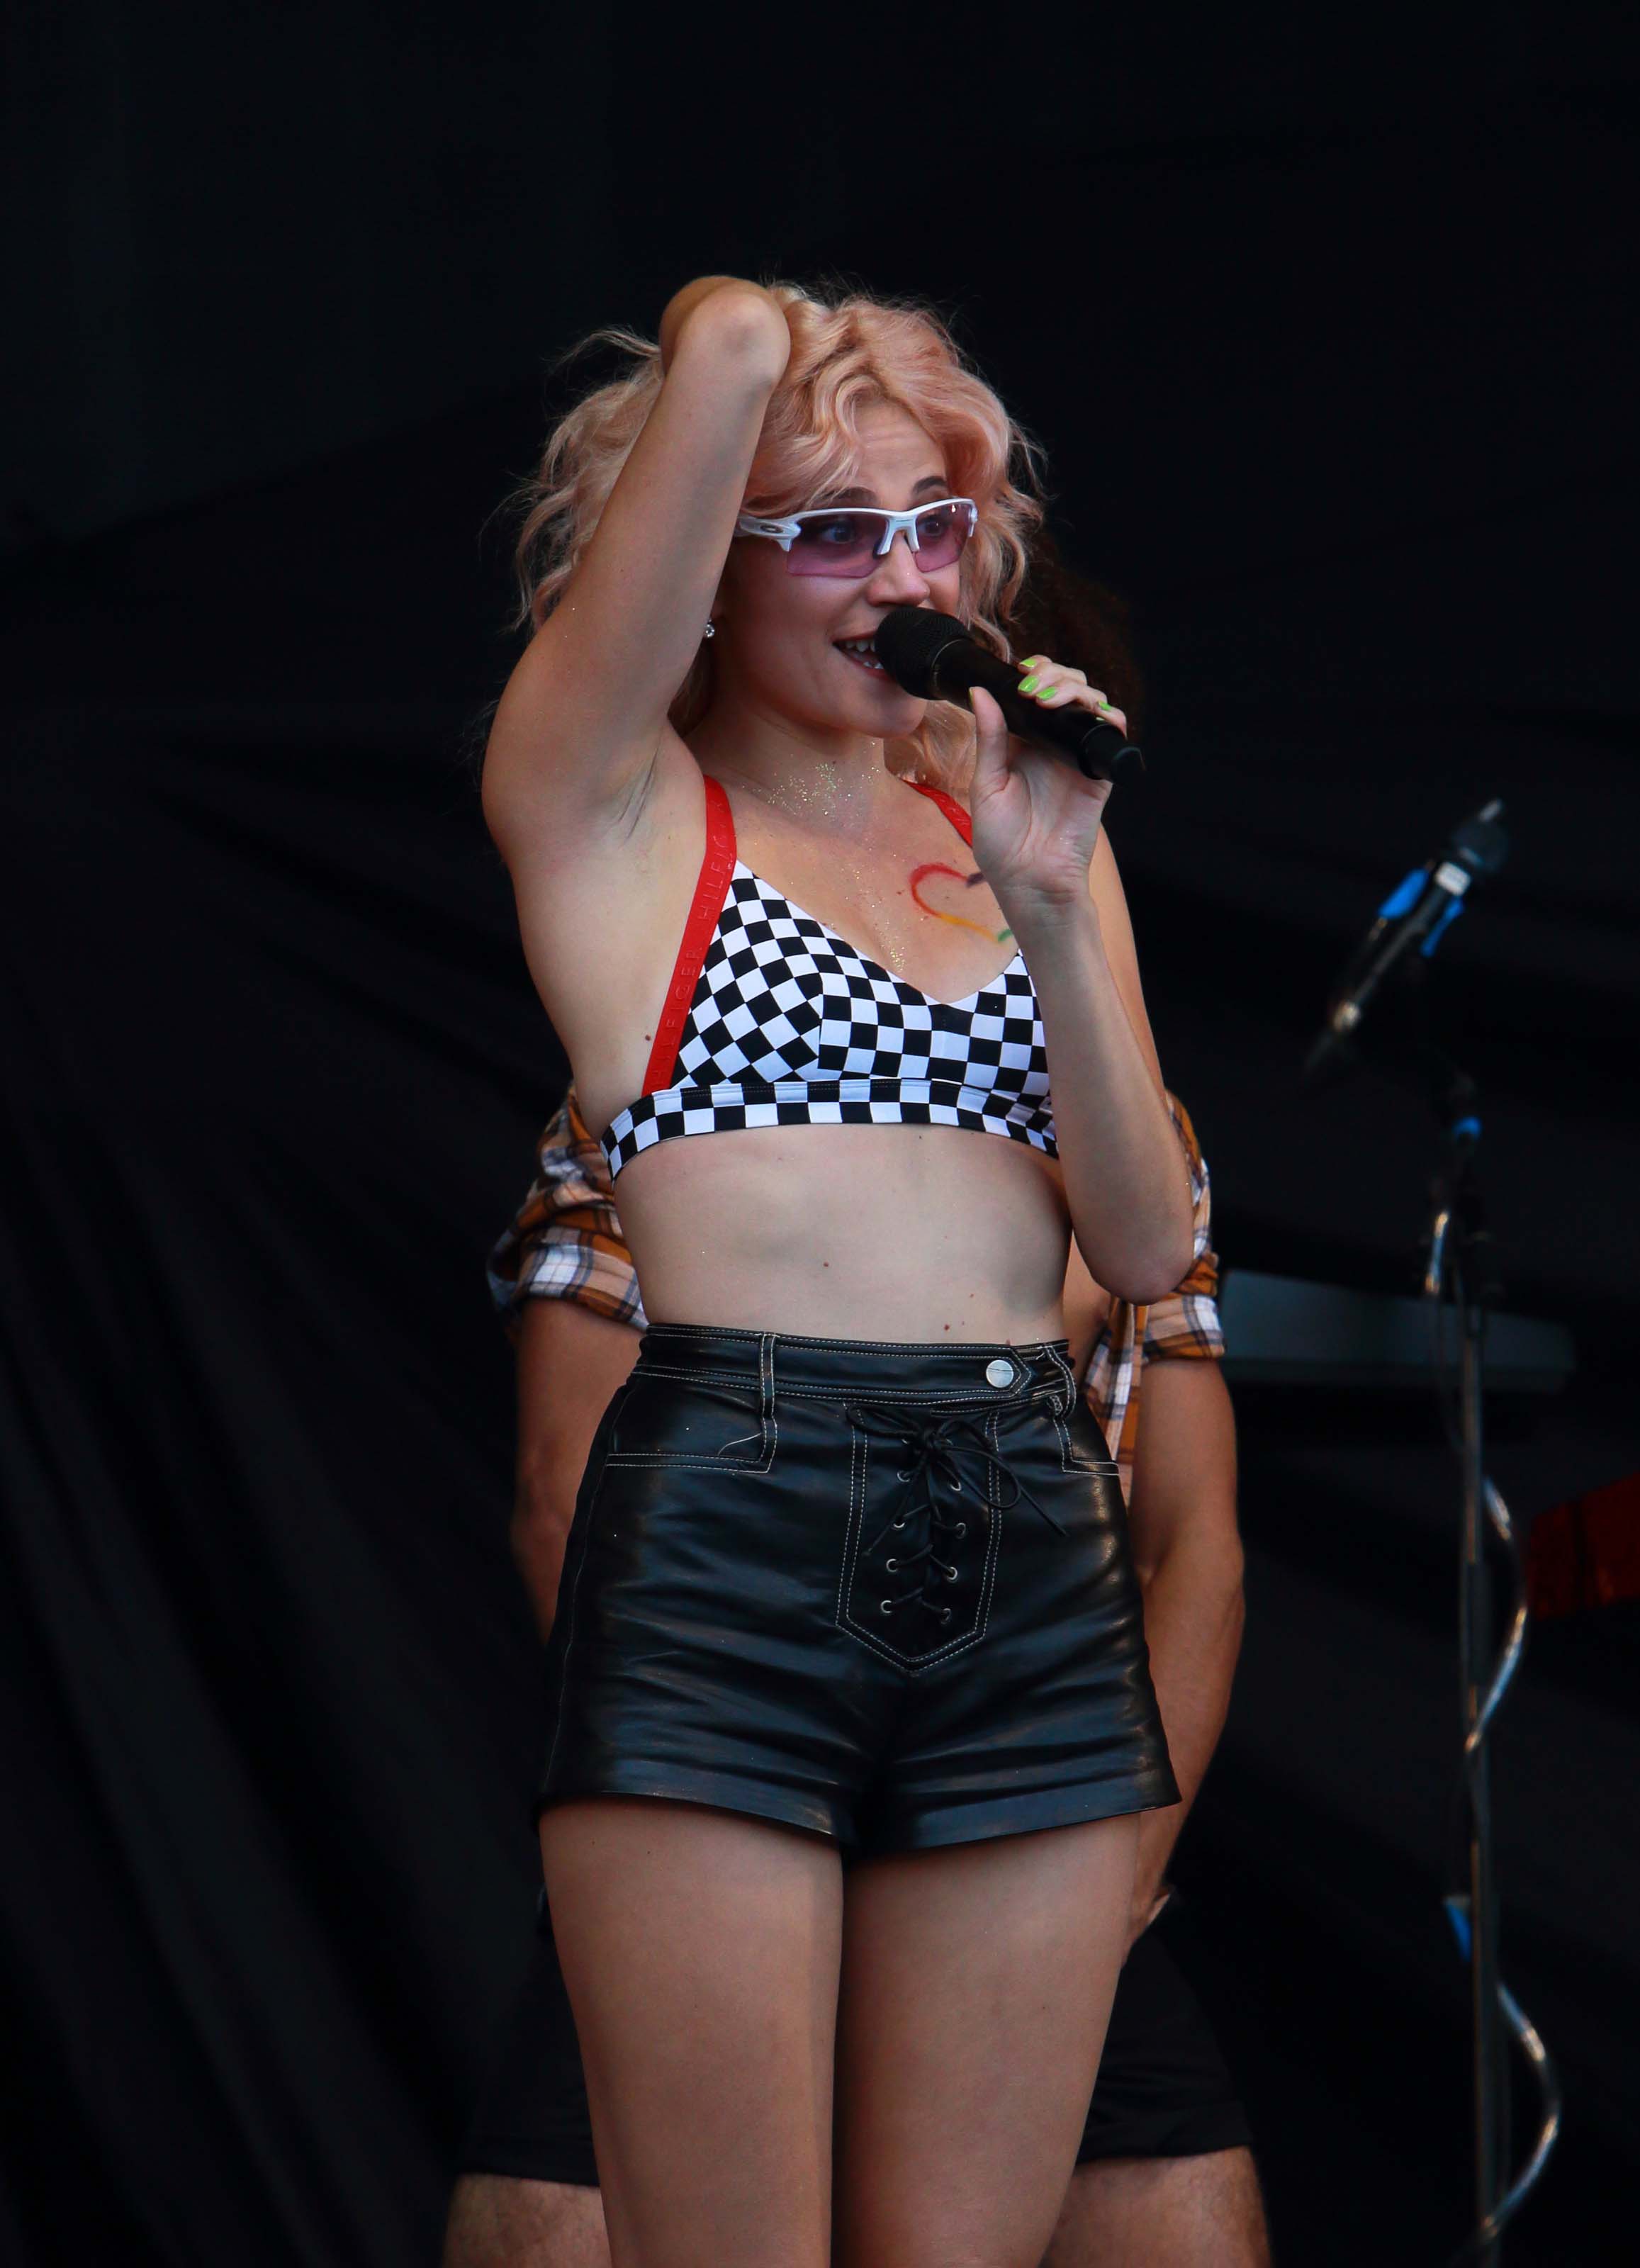 Pixie Lott performing at the Brighton Pride Festival